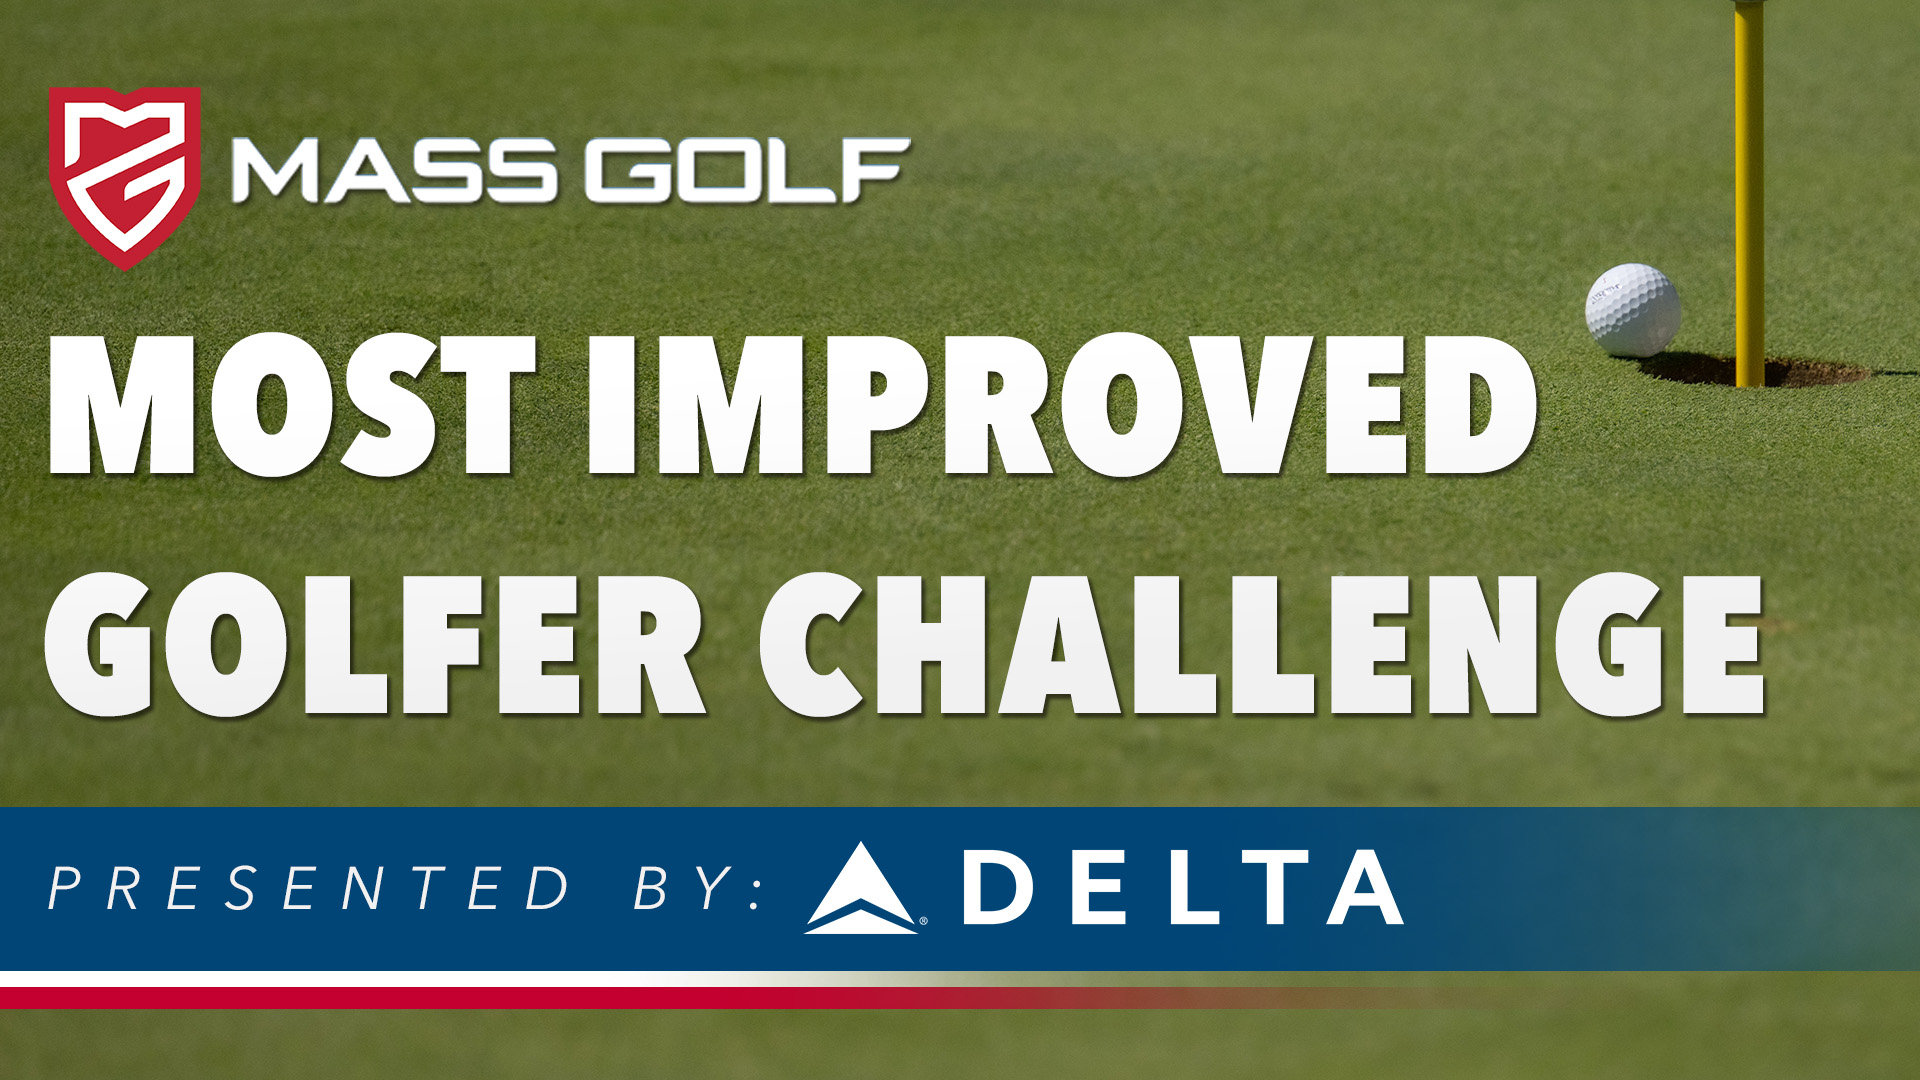 Deltas Most Improved Golfer Challenge picture